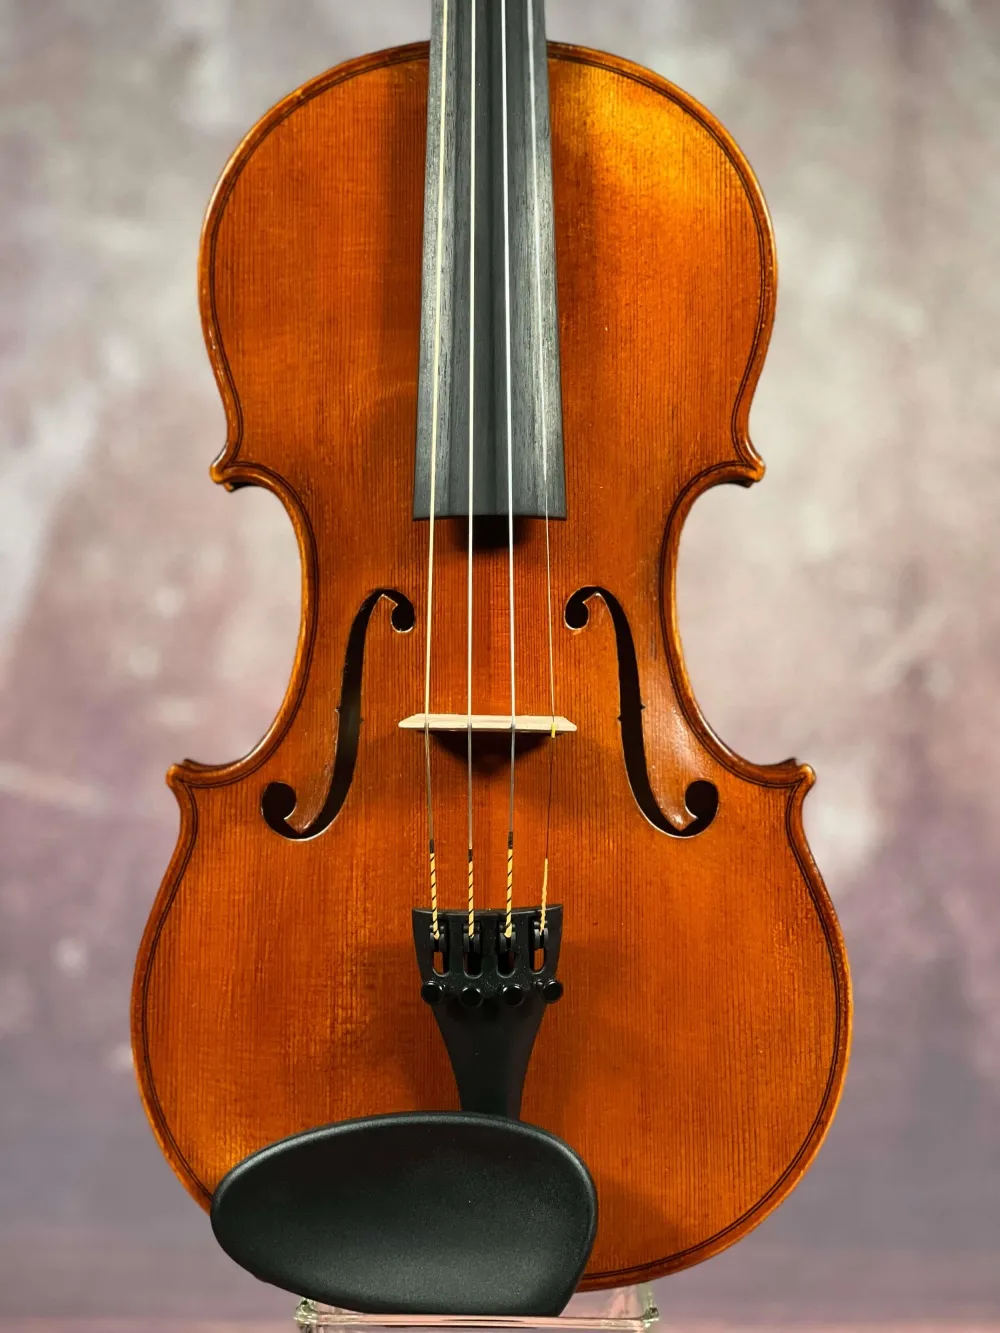 Decke-Detailansicht einer Nagy Károly 4/4 "di Bottega" Geige (Violine), genaut in Reghin, RO